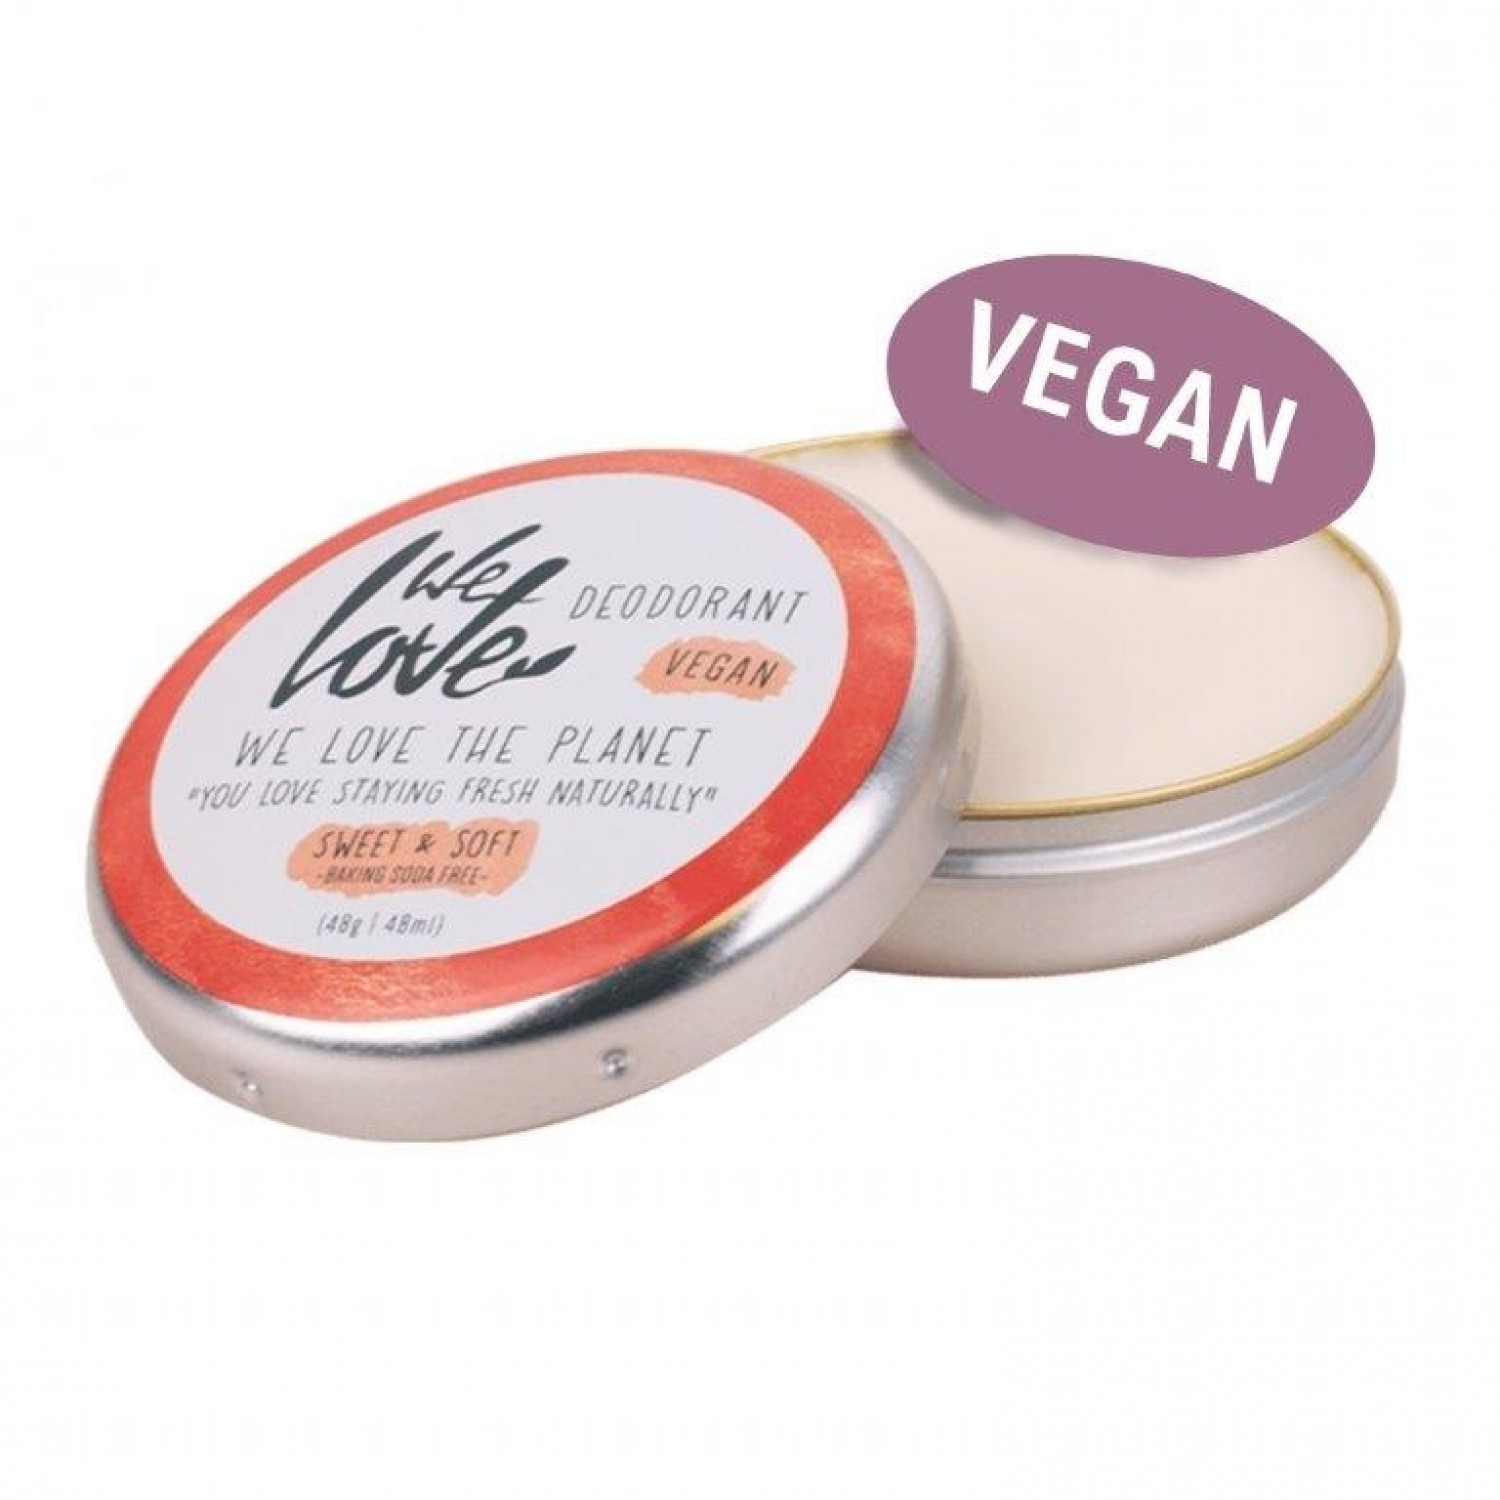 Vegan Deodorant Cream Sweet & Soft | We love the Planet